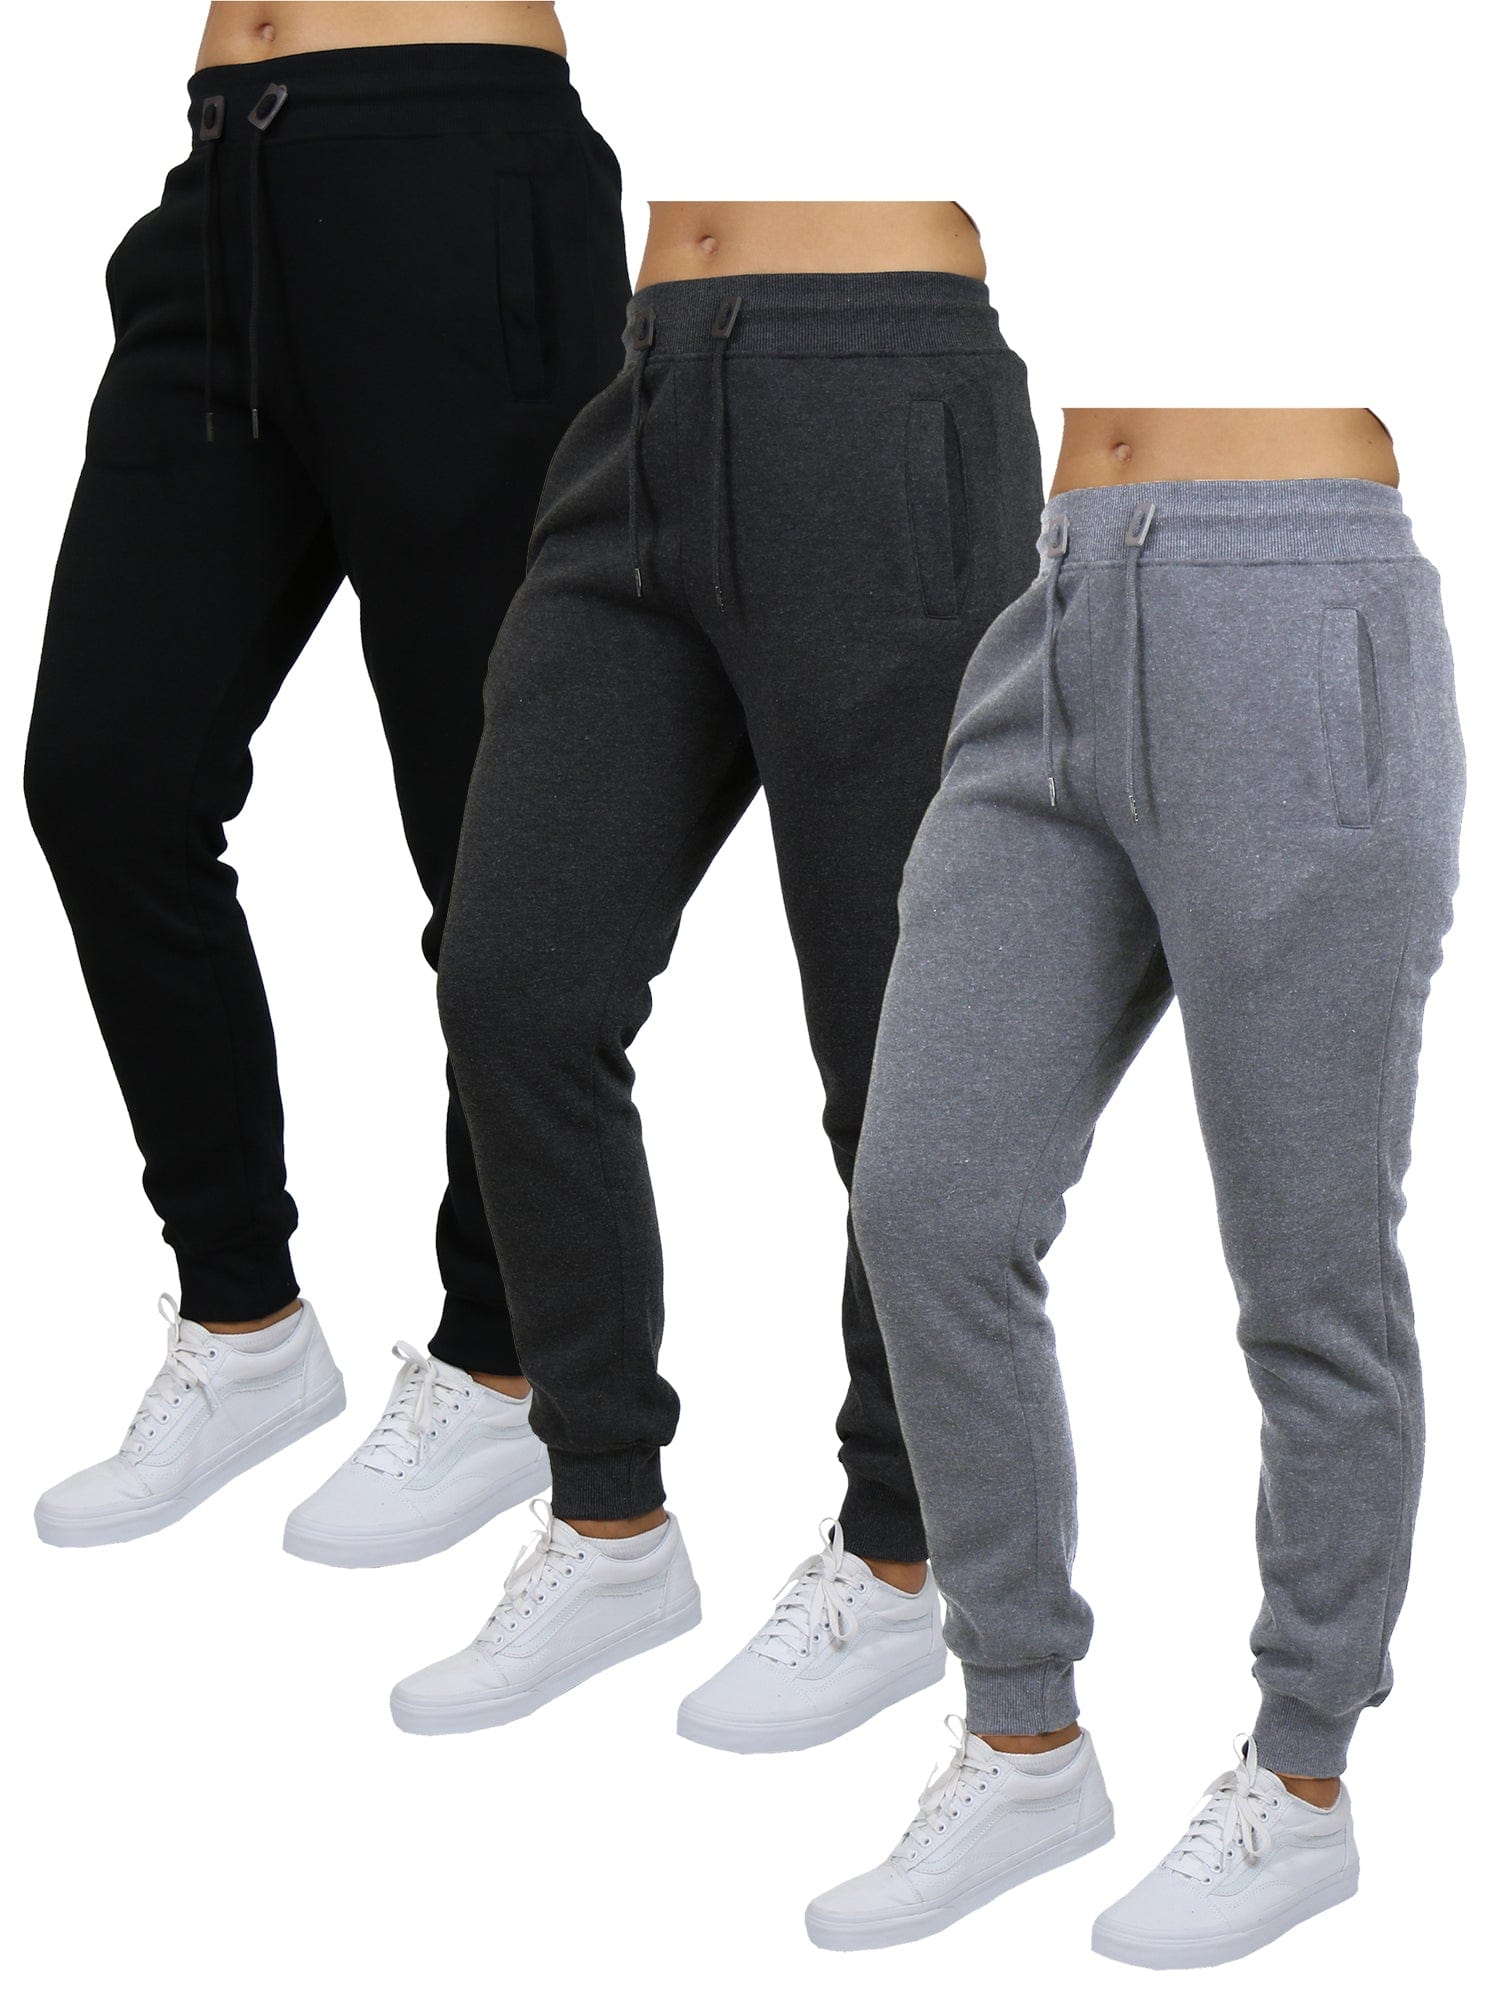 Men's Fit Grey Jogger Sweatpants with Logo